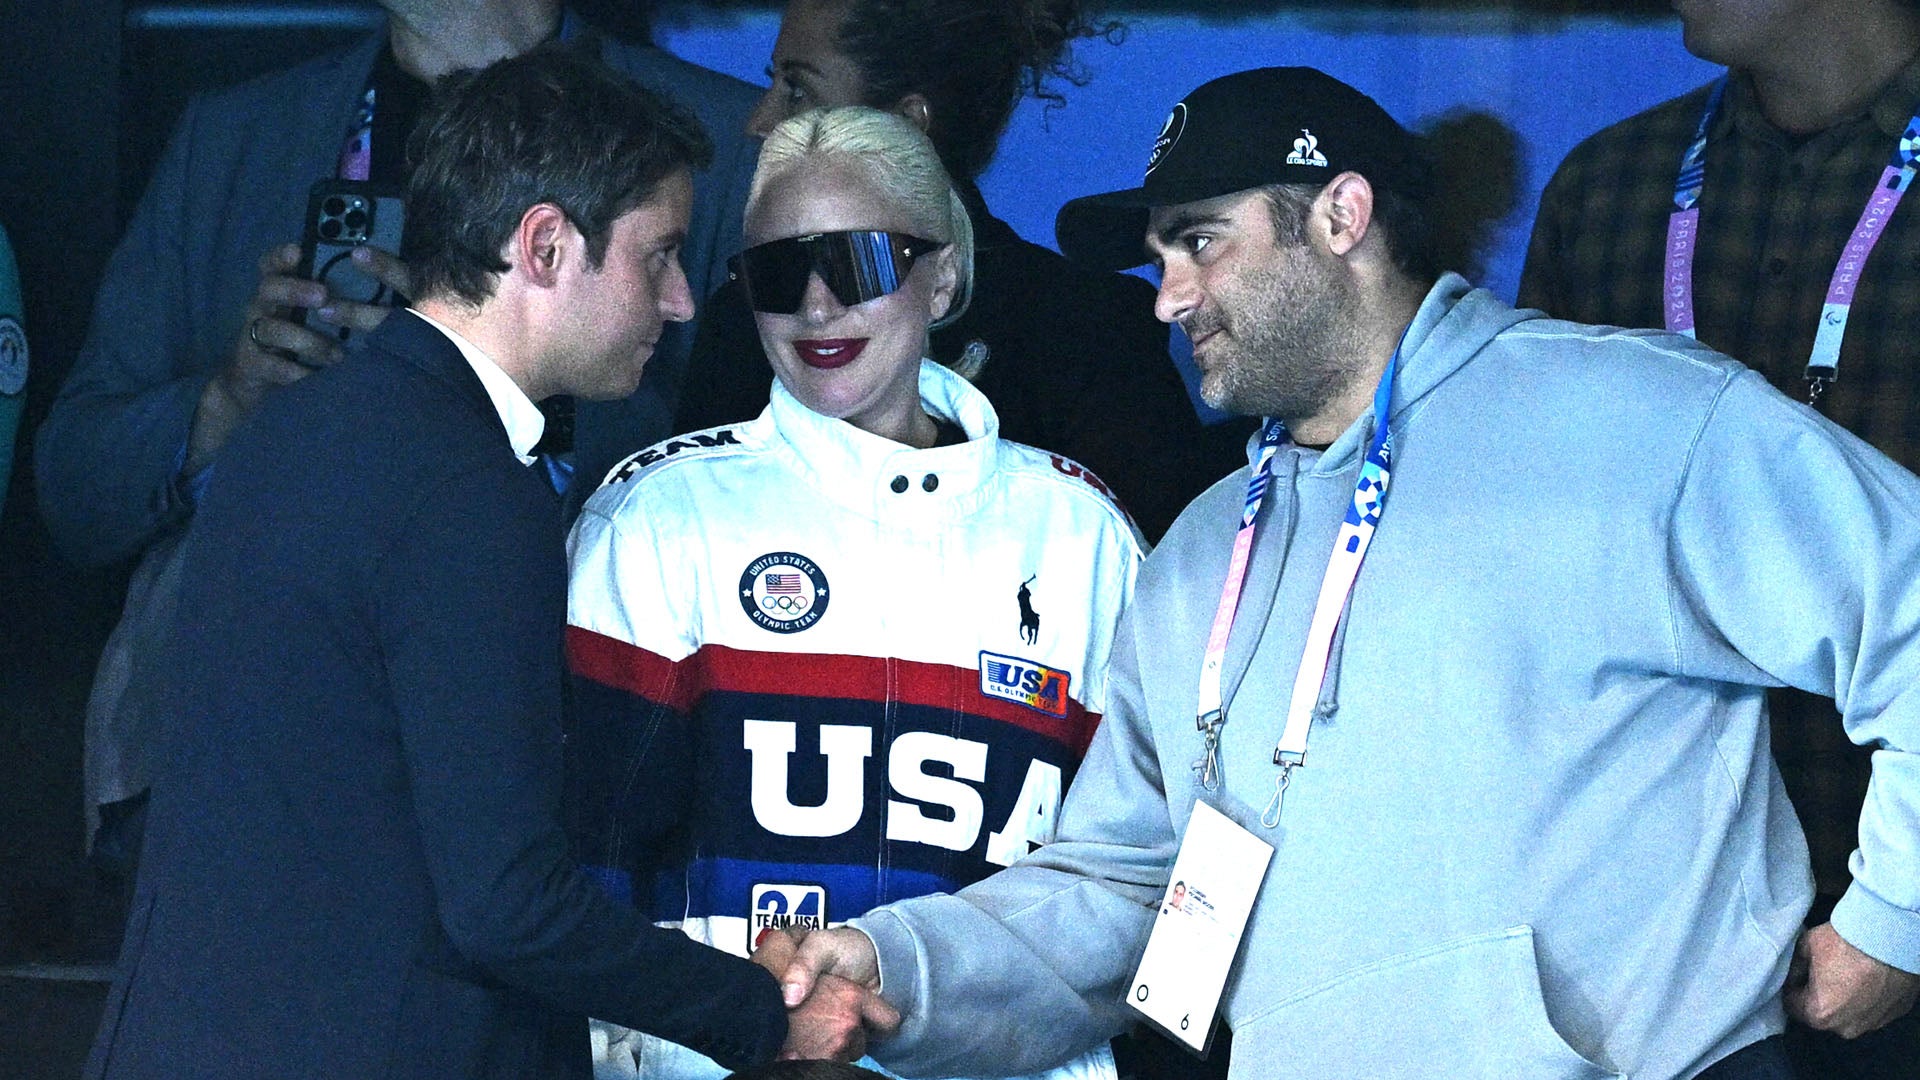 Lady Gaga Calls Michael Polansky Her Fiancé at 2024 Paris Olympics